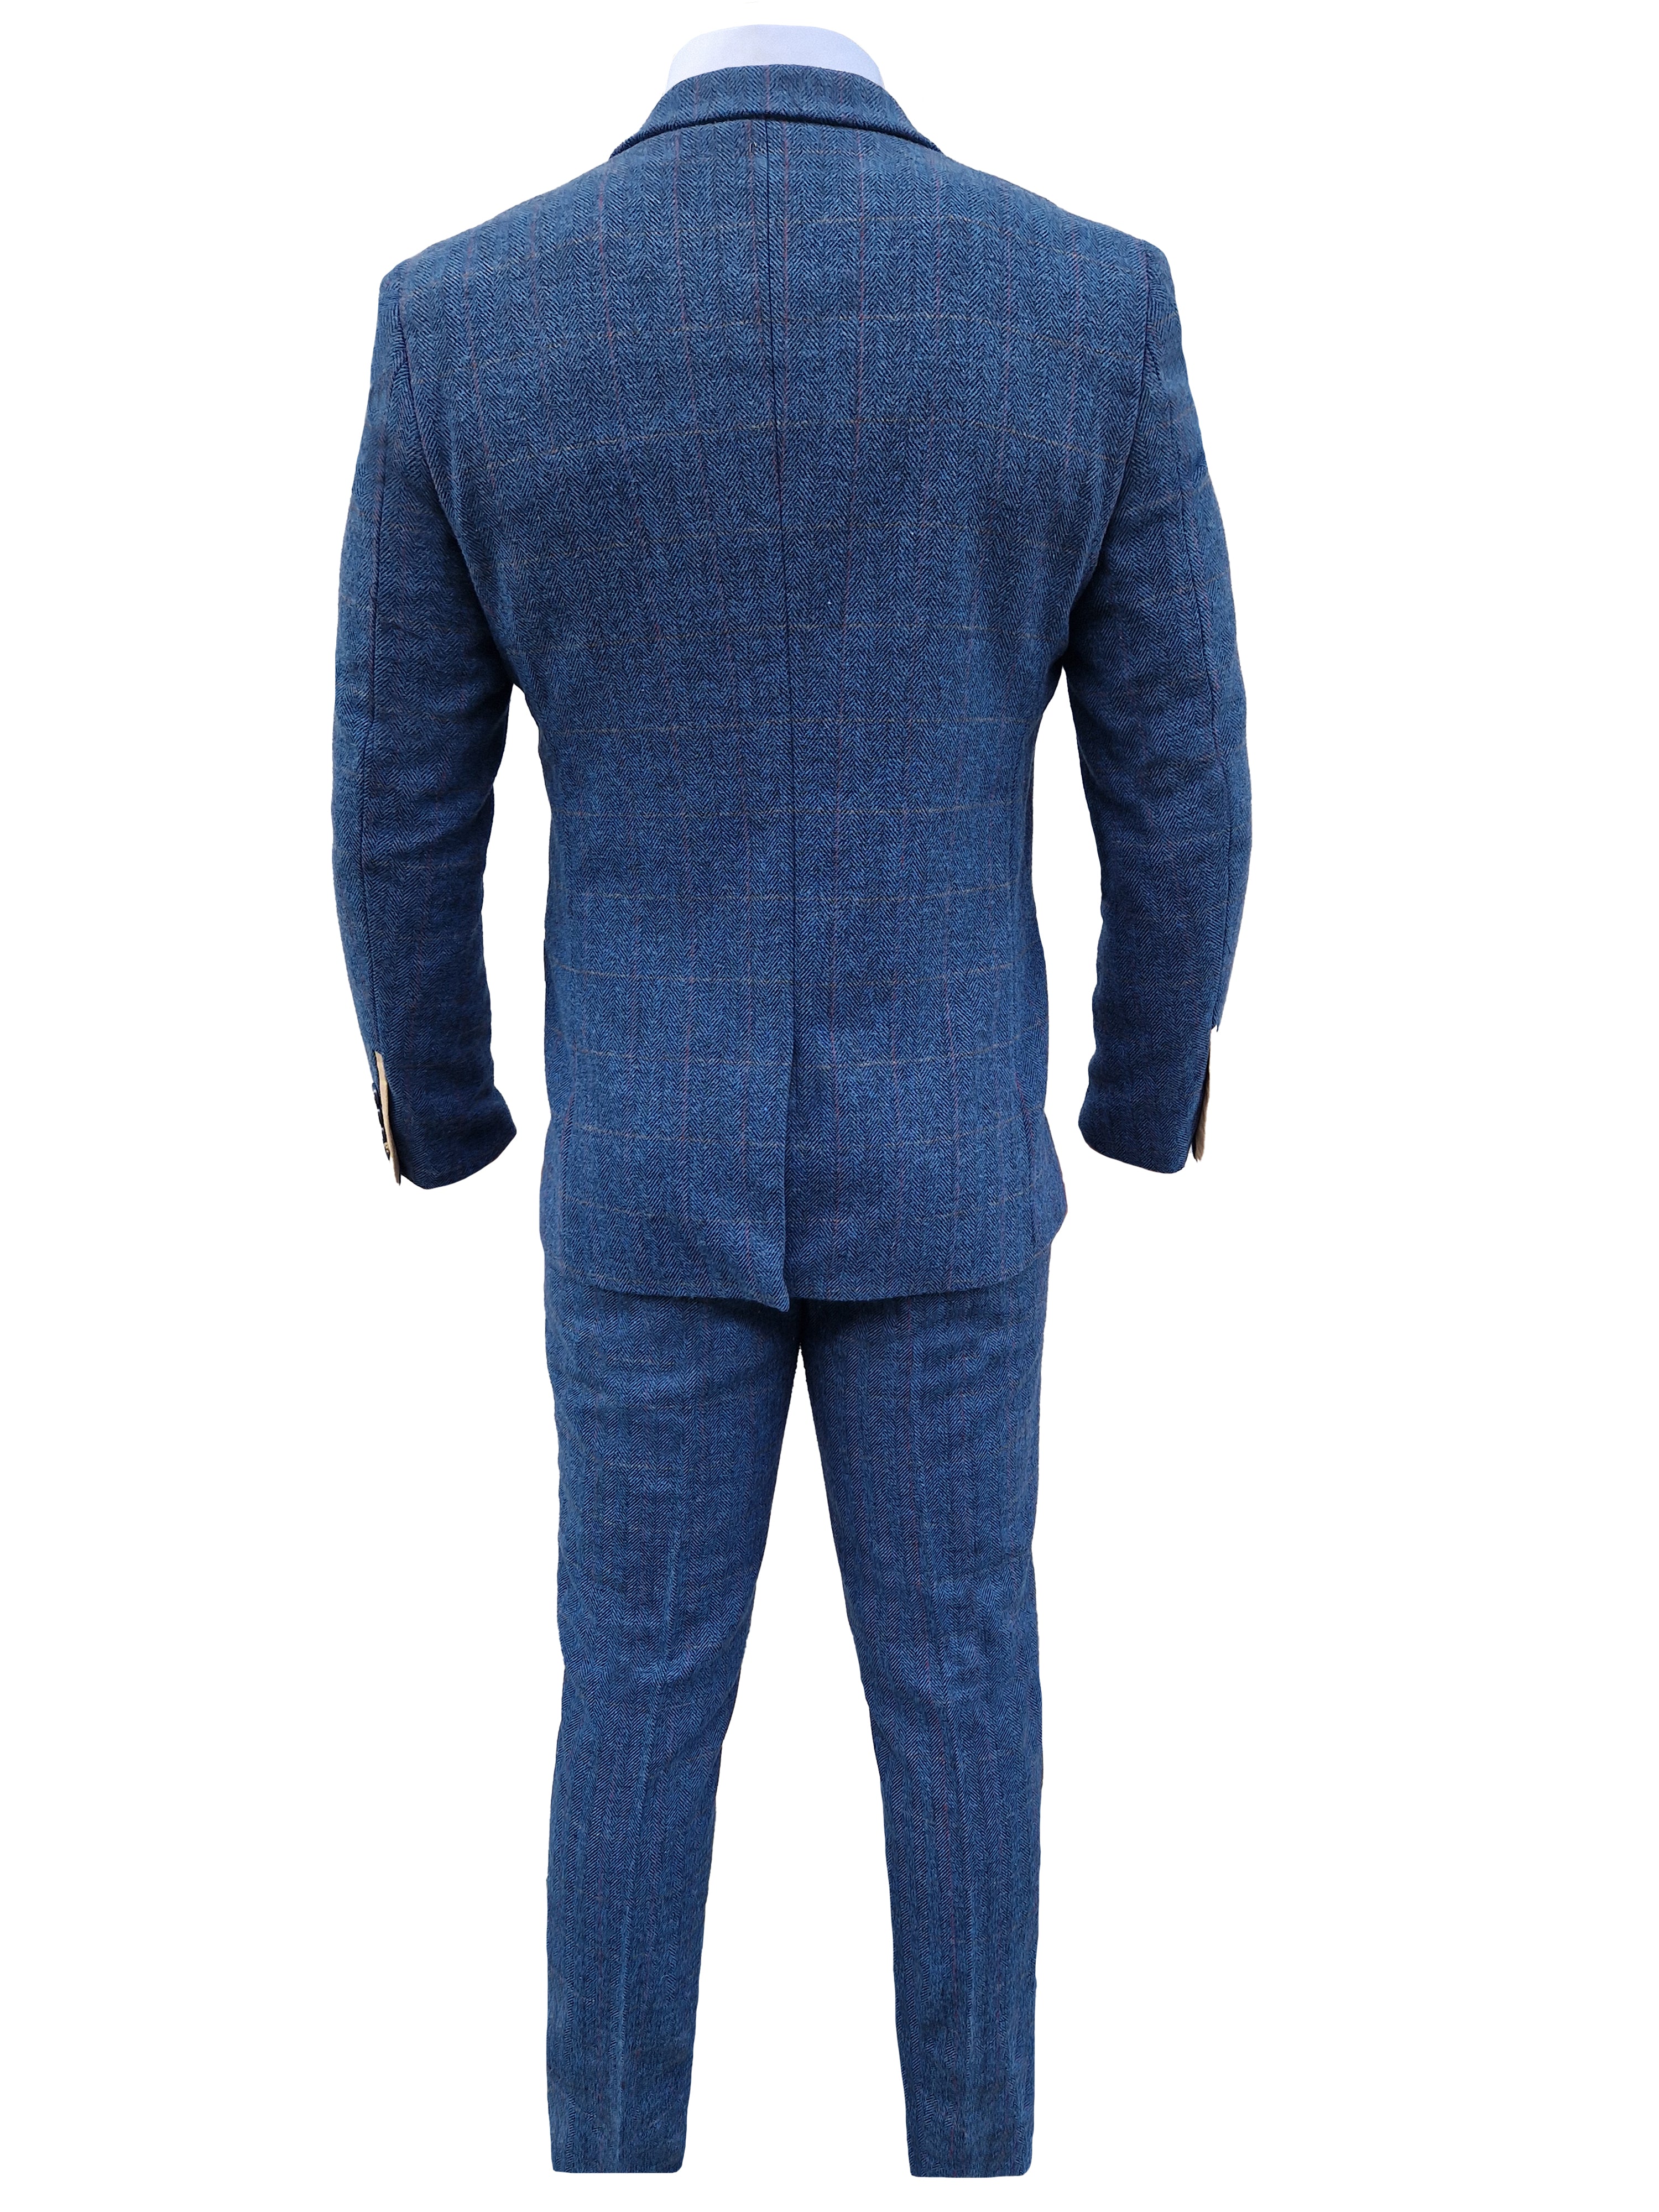 Men's suit three piece Dion blue herringbone